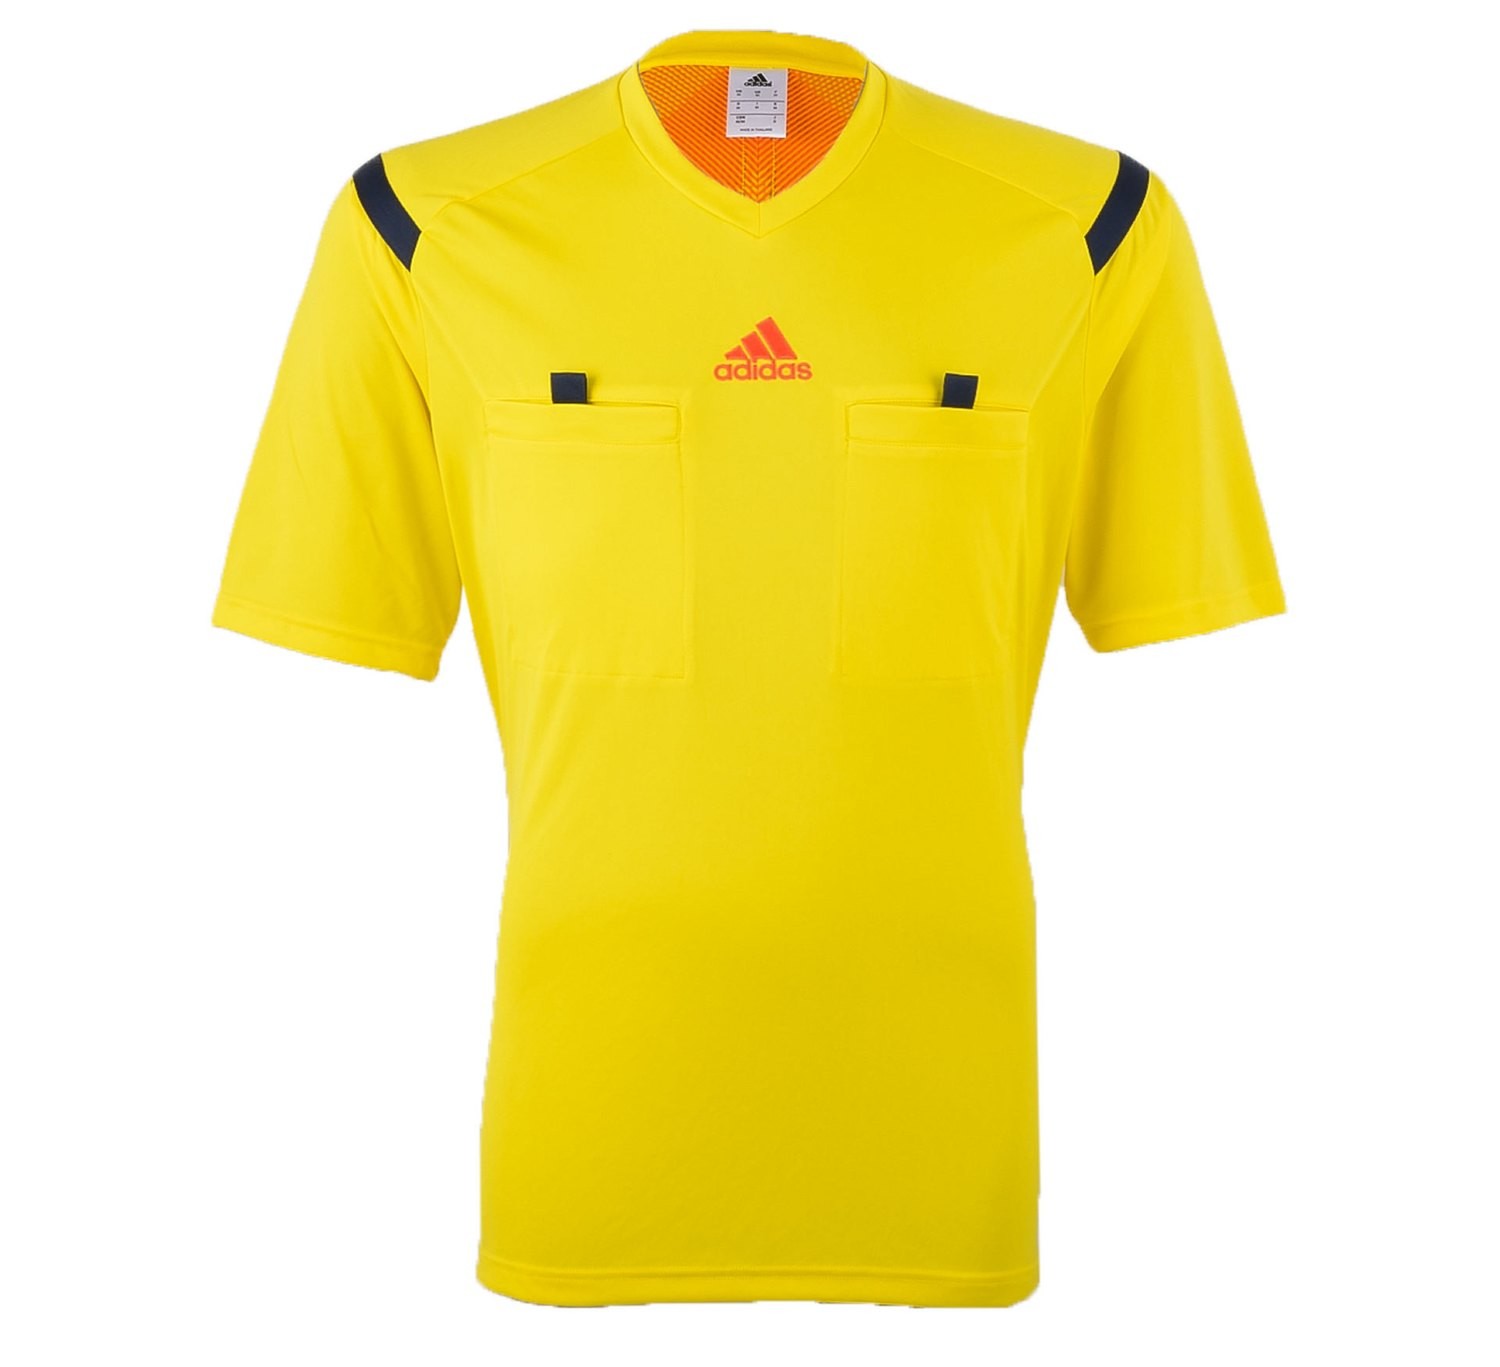 adidas referee kit 2016